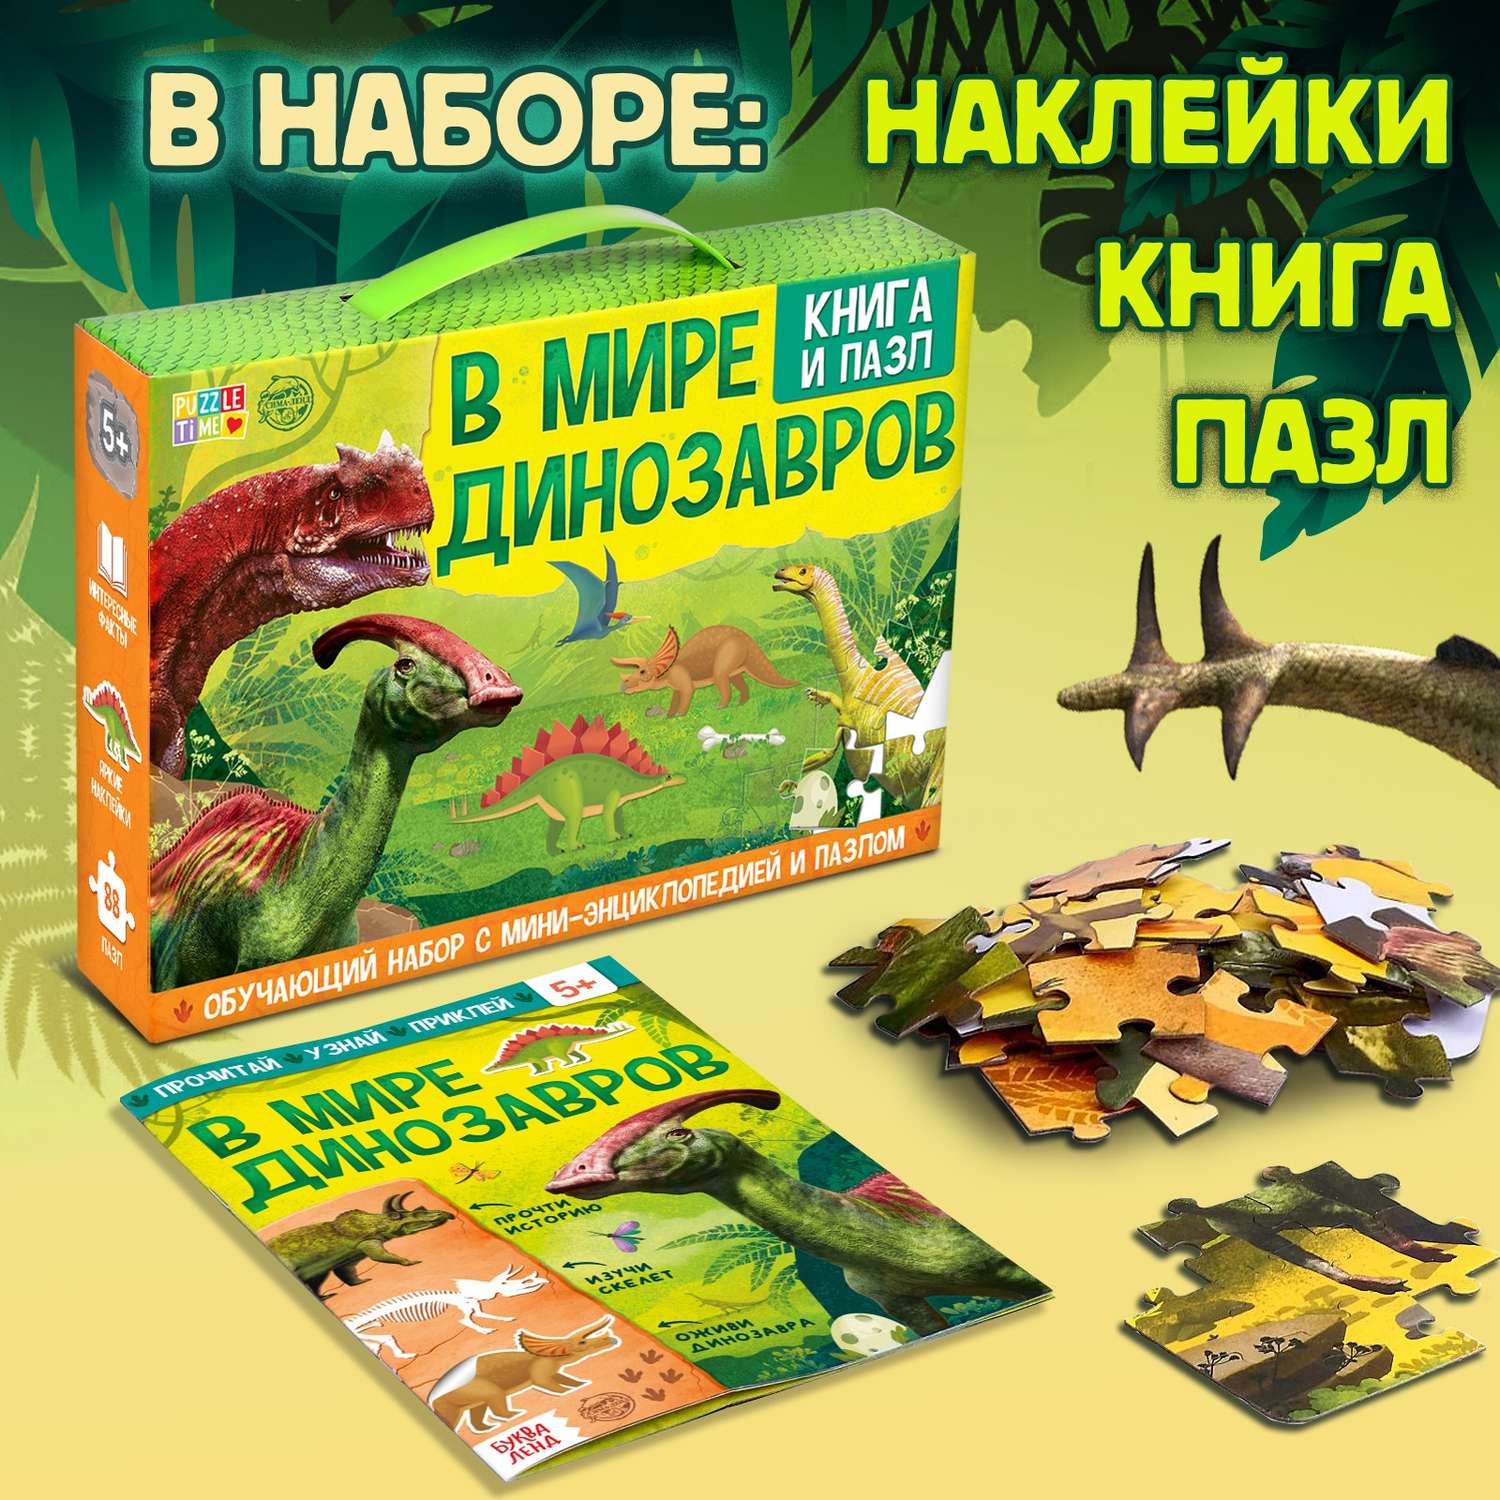 Обучающий набор Puzzle Time «В мире динозавров» книга и пазл - фото 2